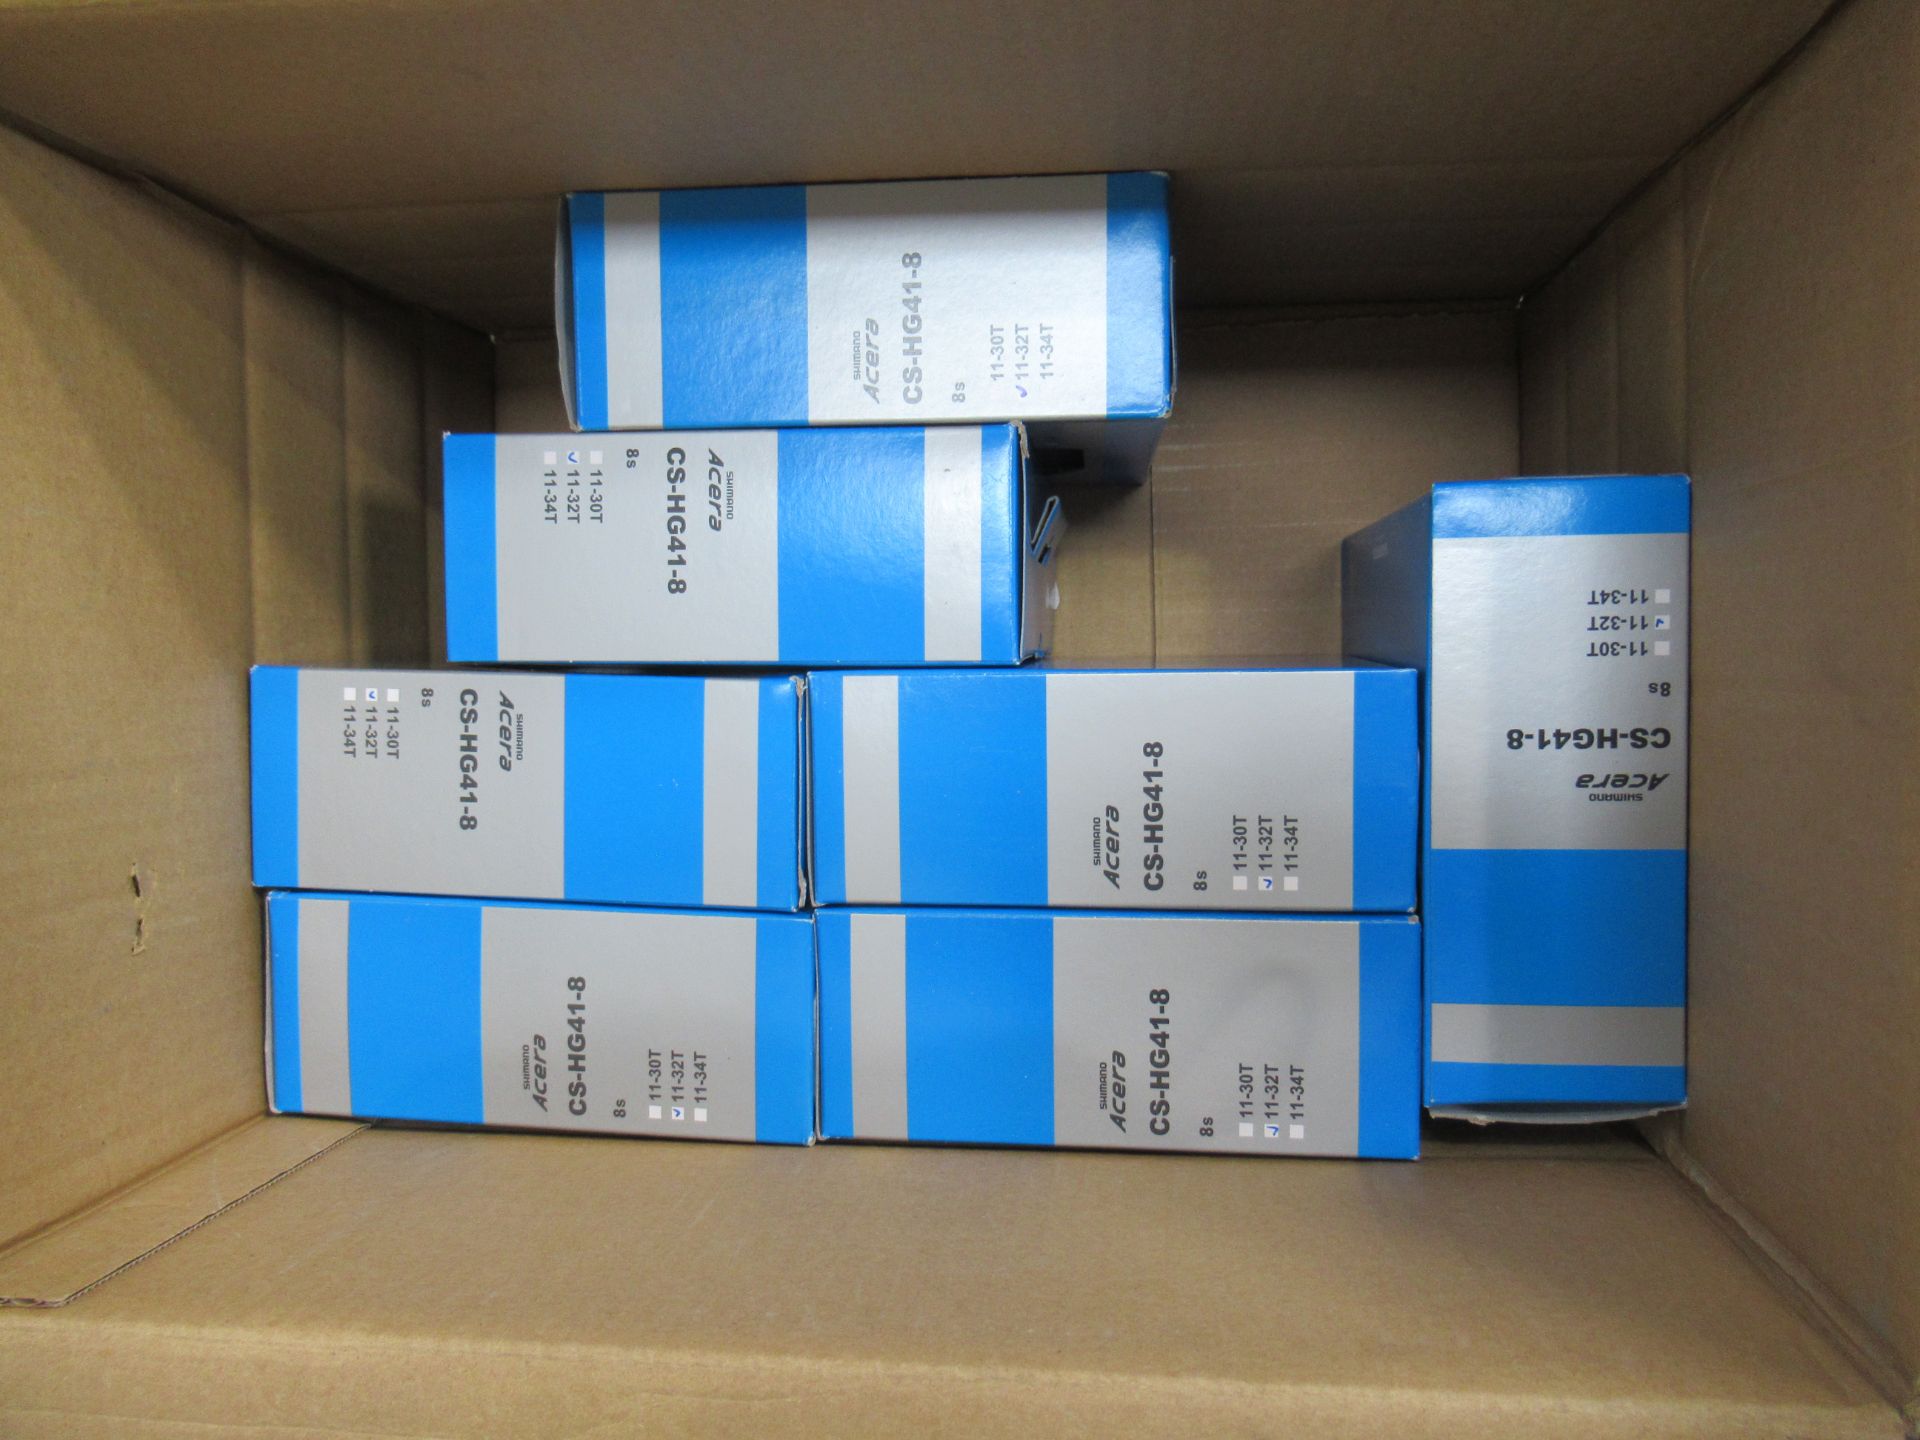 7 x Shimano CS-HG41 11/34T 8-SPD Cassettes (£21.99 each)